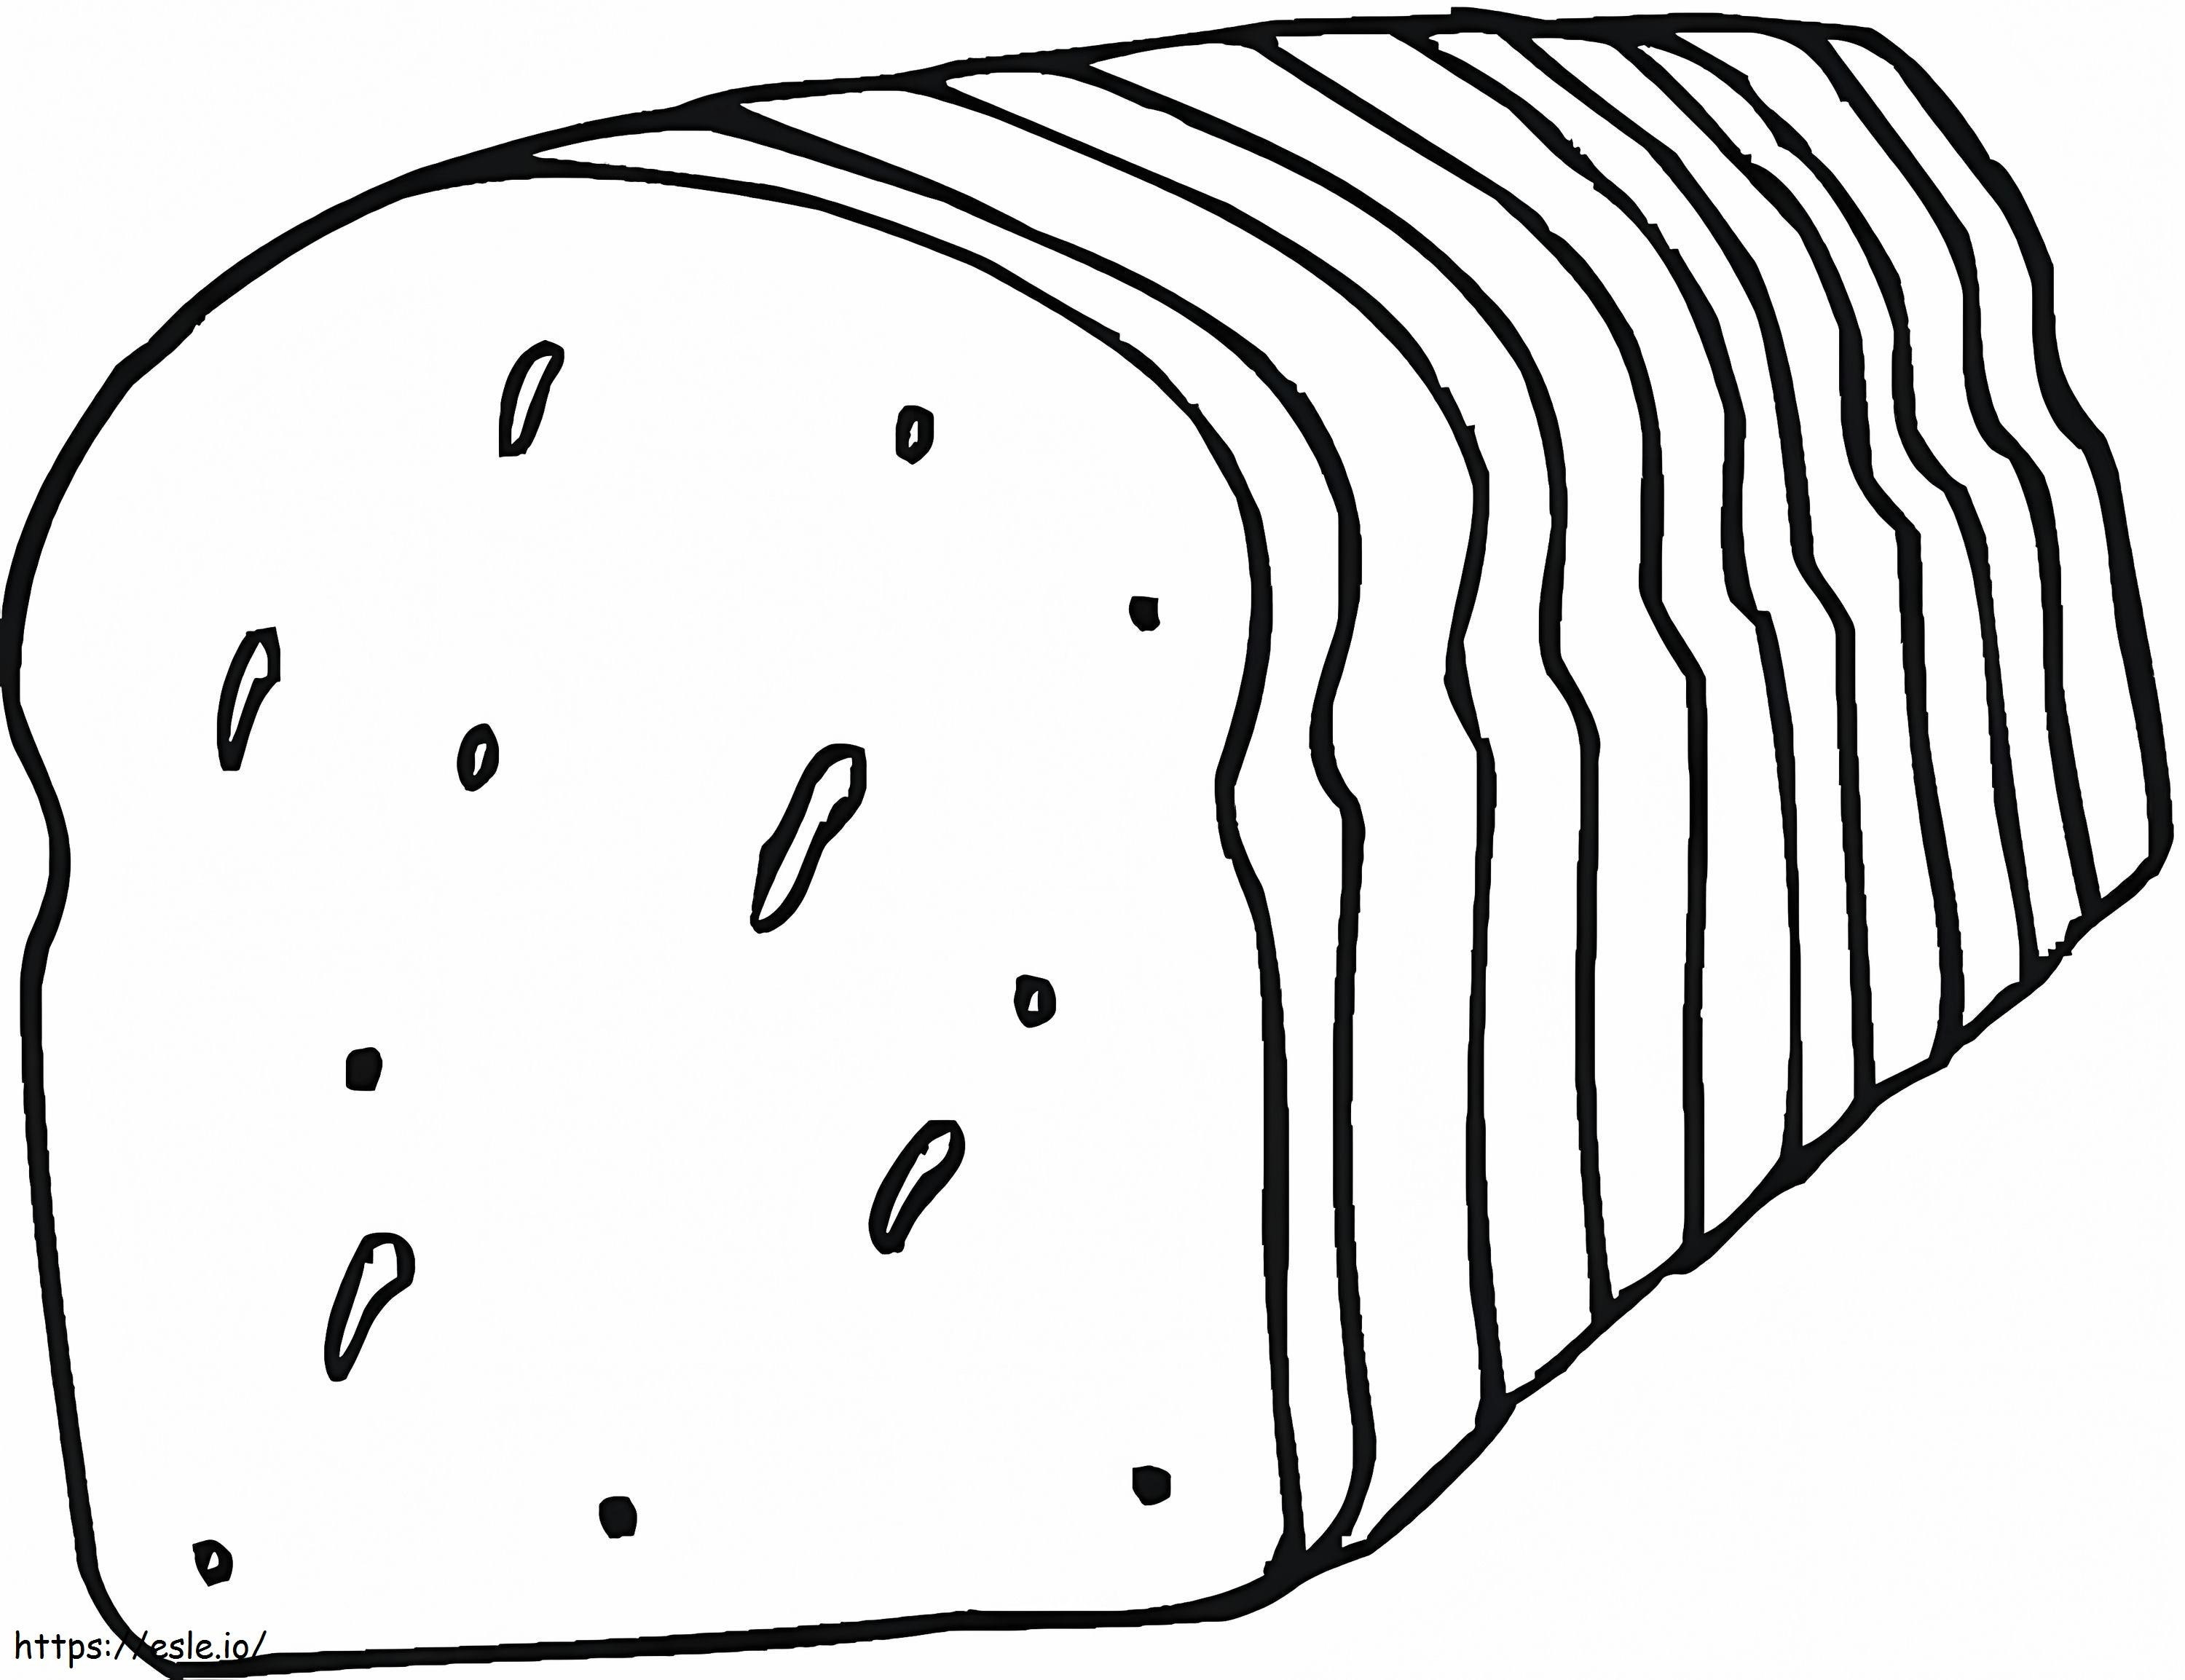 Bread 1 coloring page